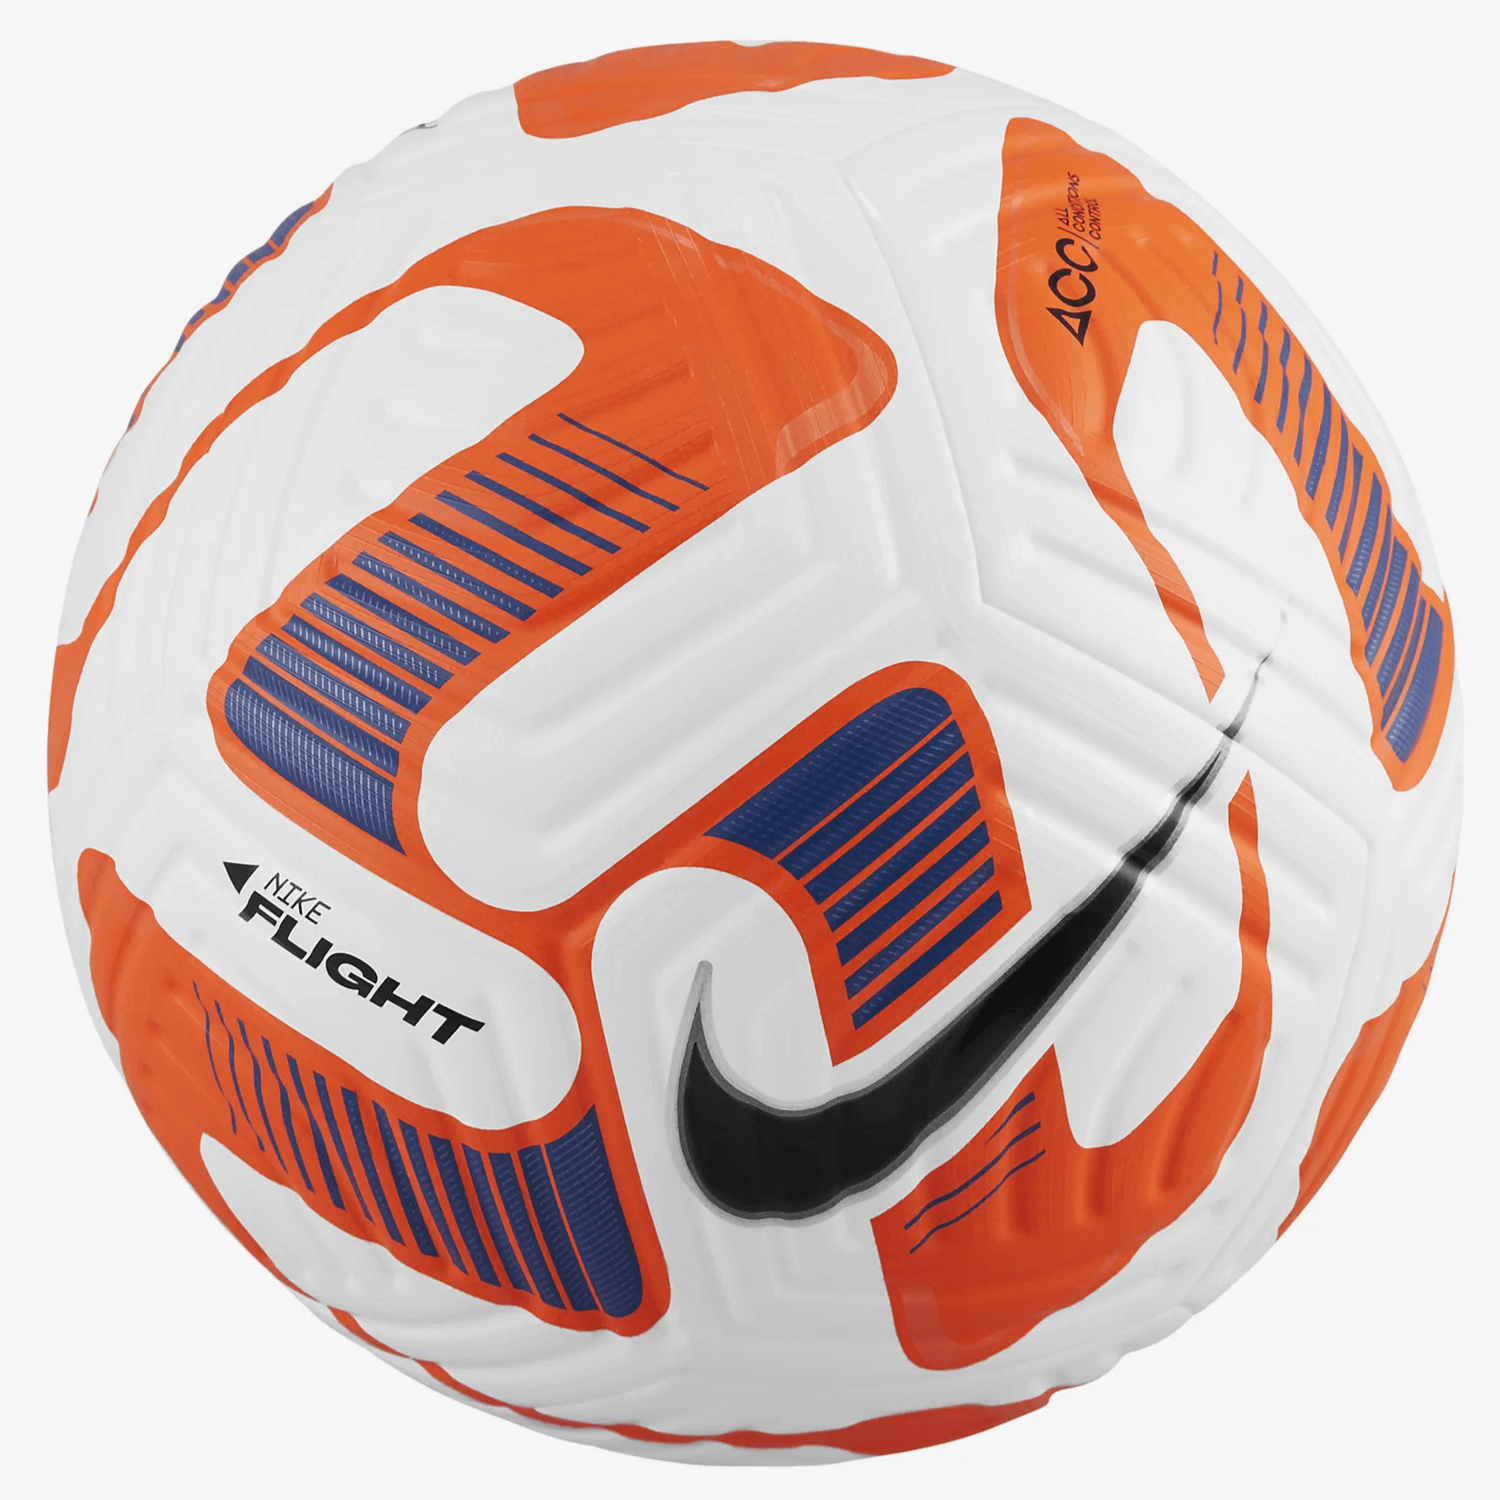 Nike Premier League Flight Official Match Ball (White) - Soccer Wearhouse